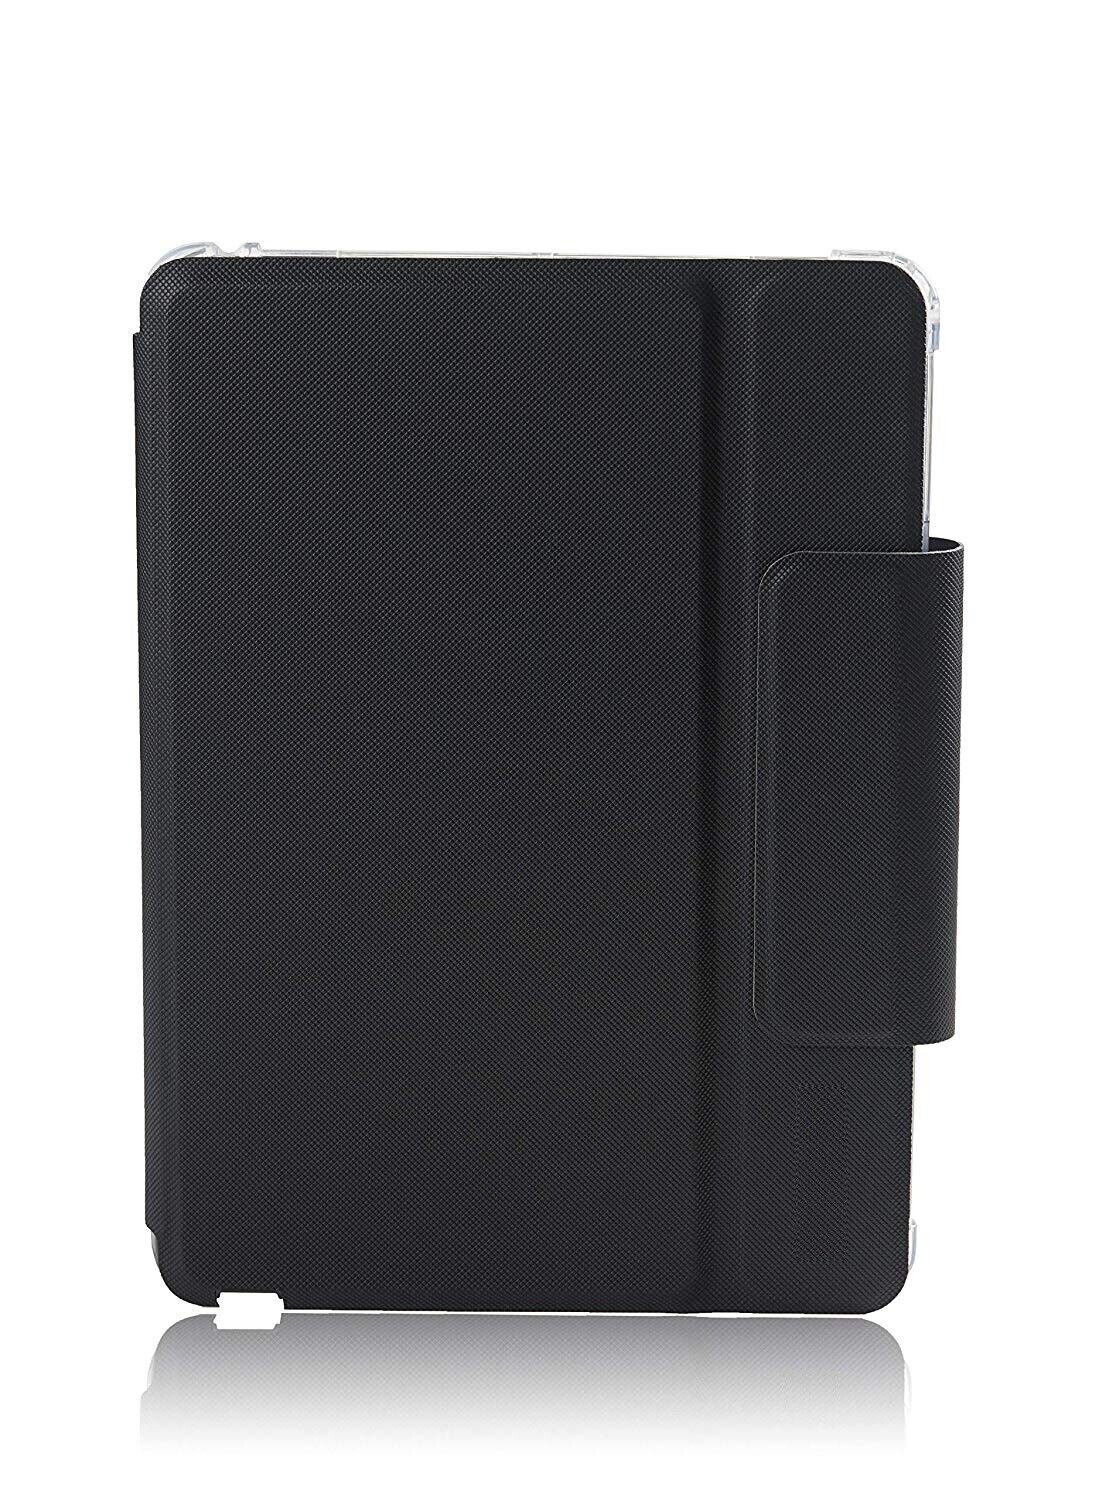 Premium Bluetooth Keyboard Case/Folio For iPad 11 2020, Flip Stand Cover